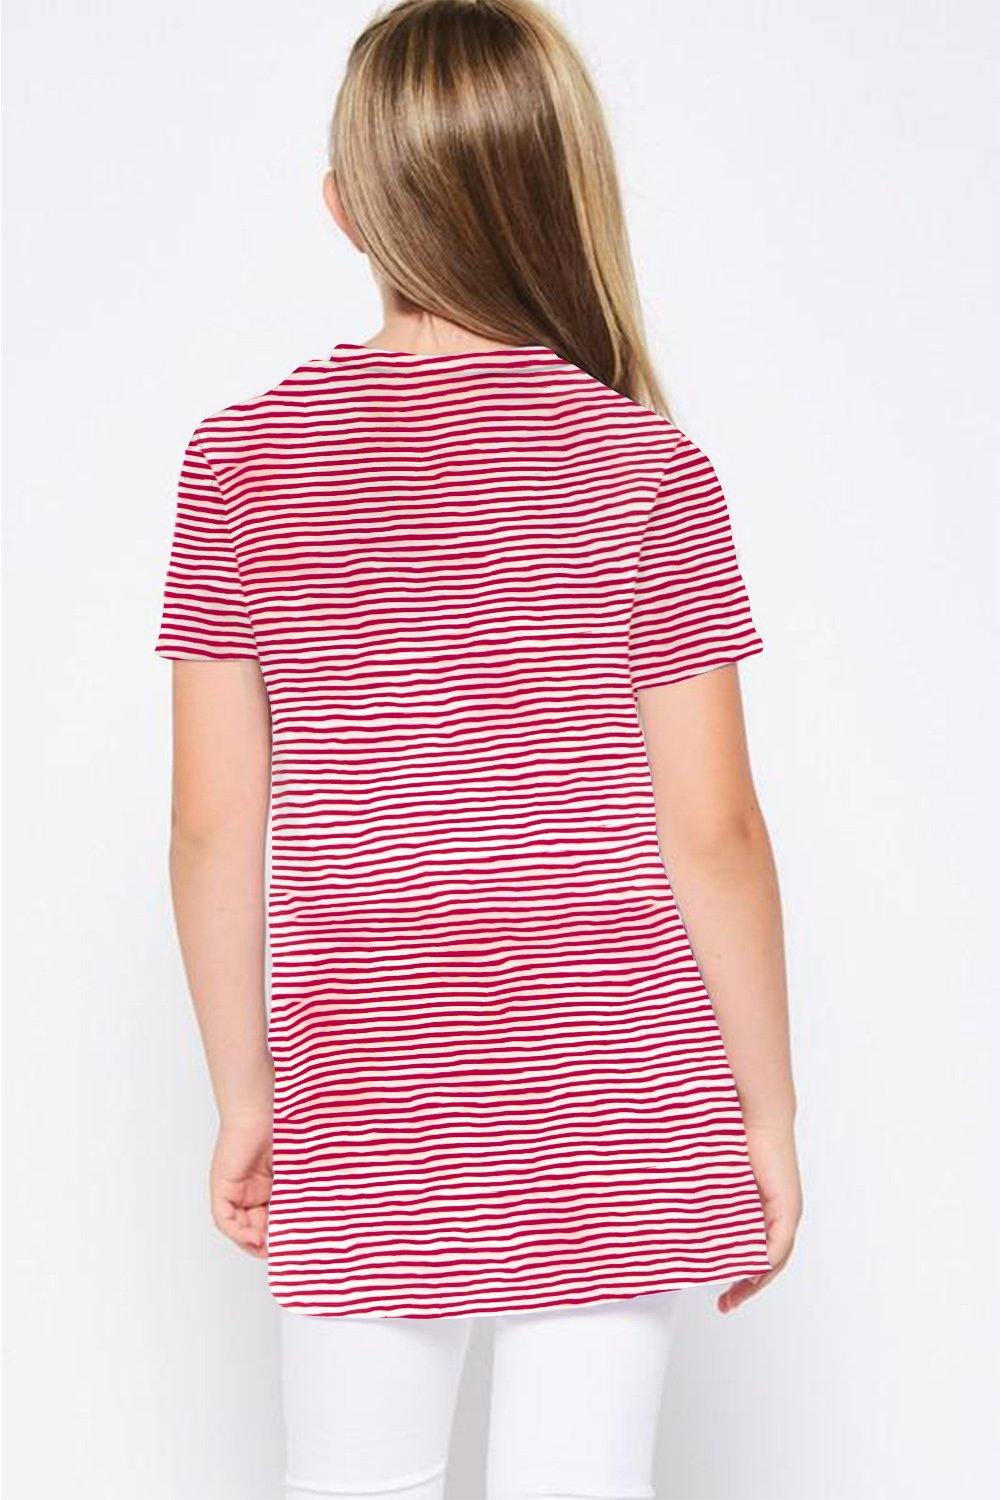 Short Sleeve Front Twist Striped Girl's Top - L & M Kee, LLC